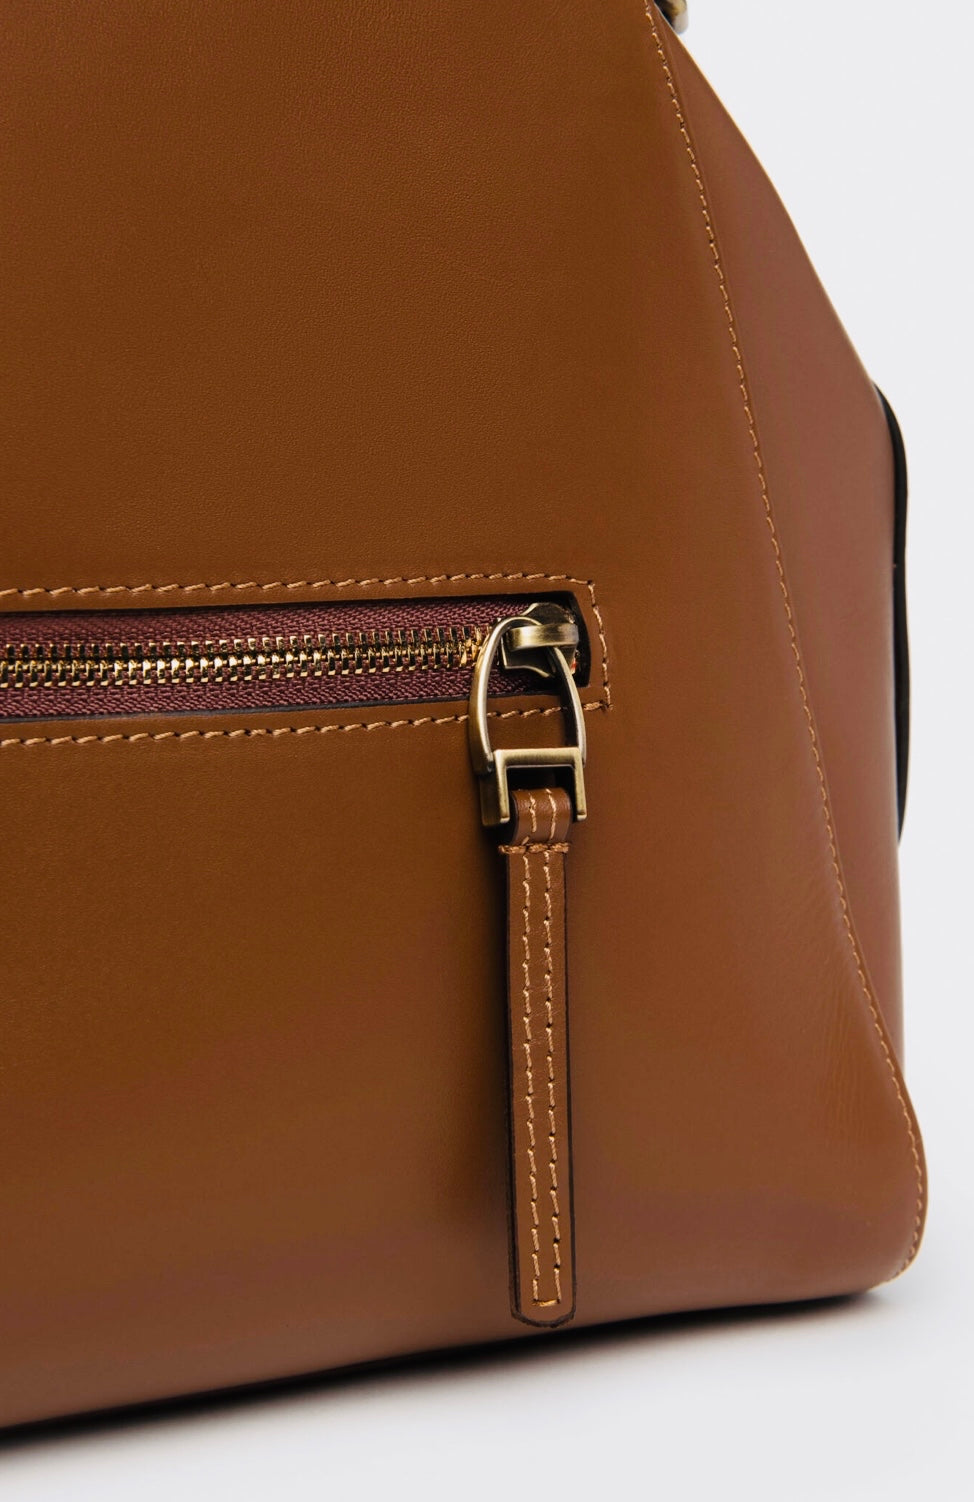 NeroGiardini tan leather handbag